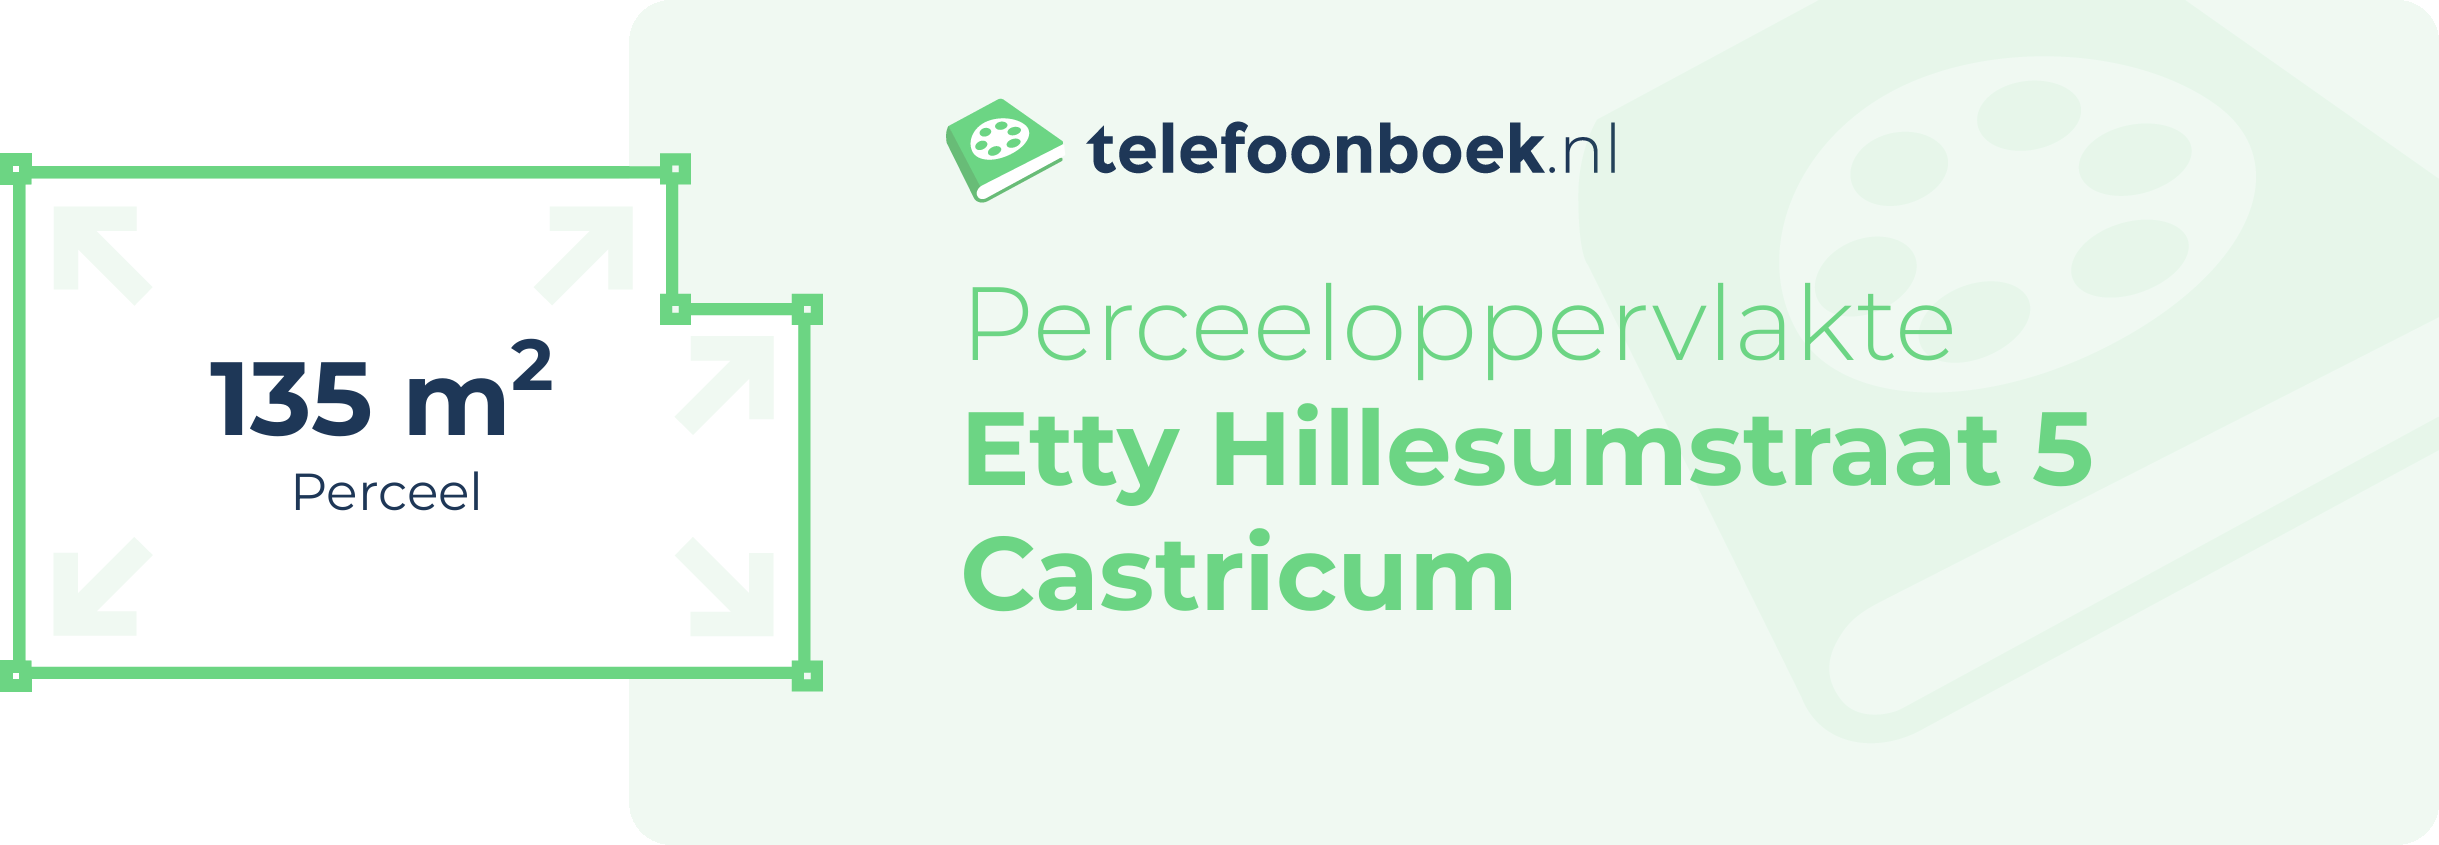 Perceeloppervlakte Etty Hillesumstraat 5 Castricum